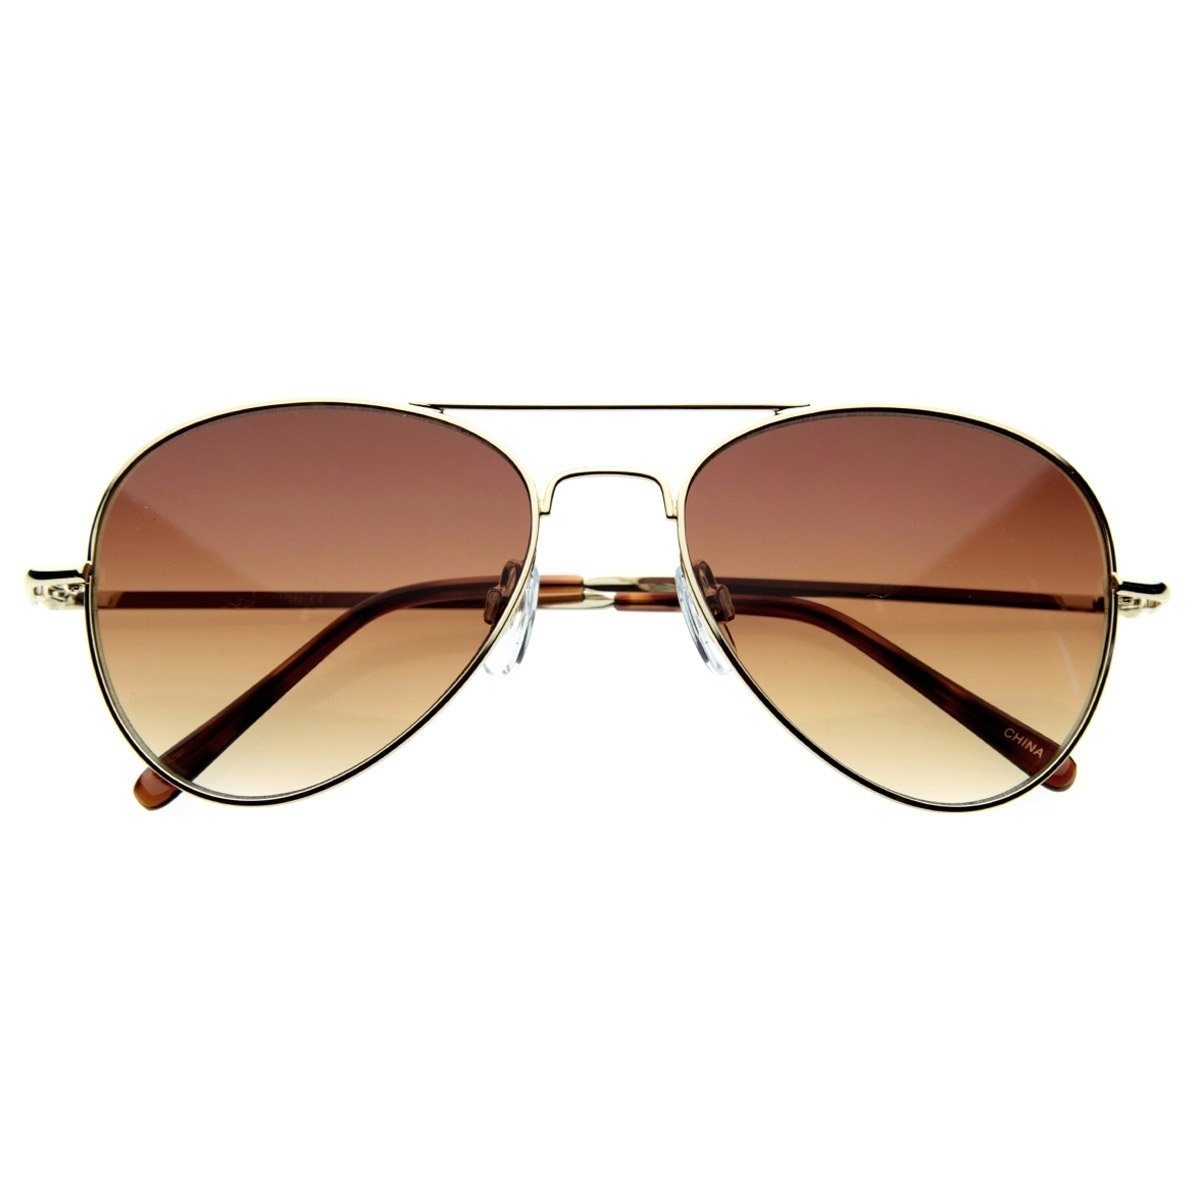 Small Classic Aviator Sunglasses 50mm Aviators - Gold